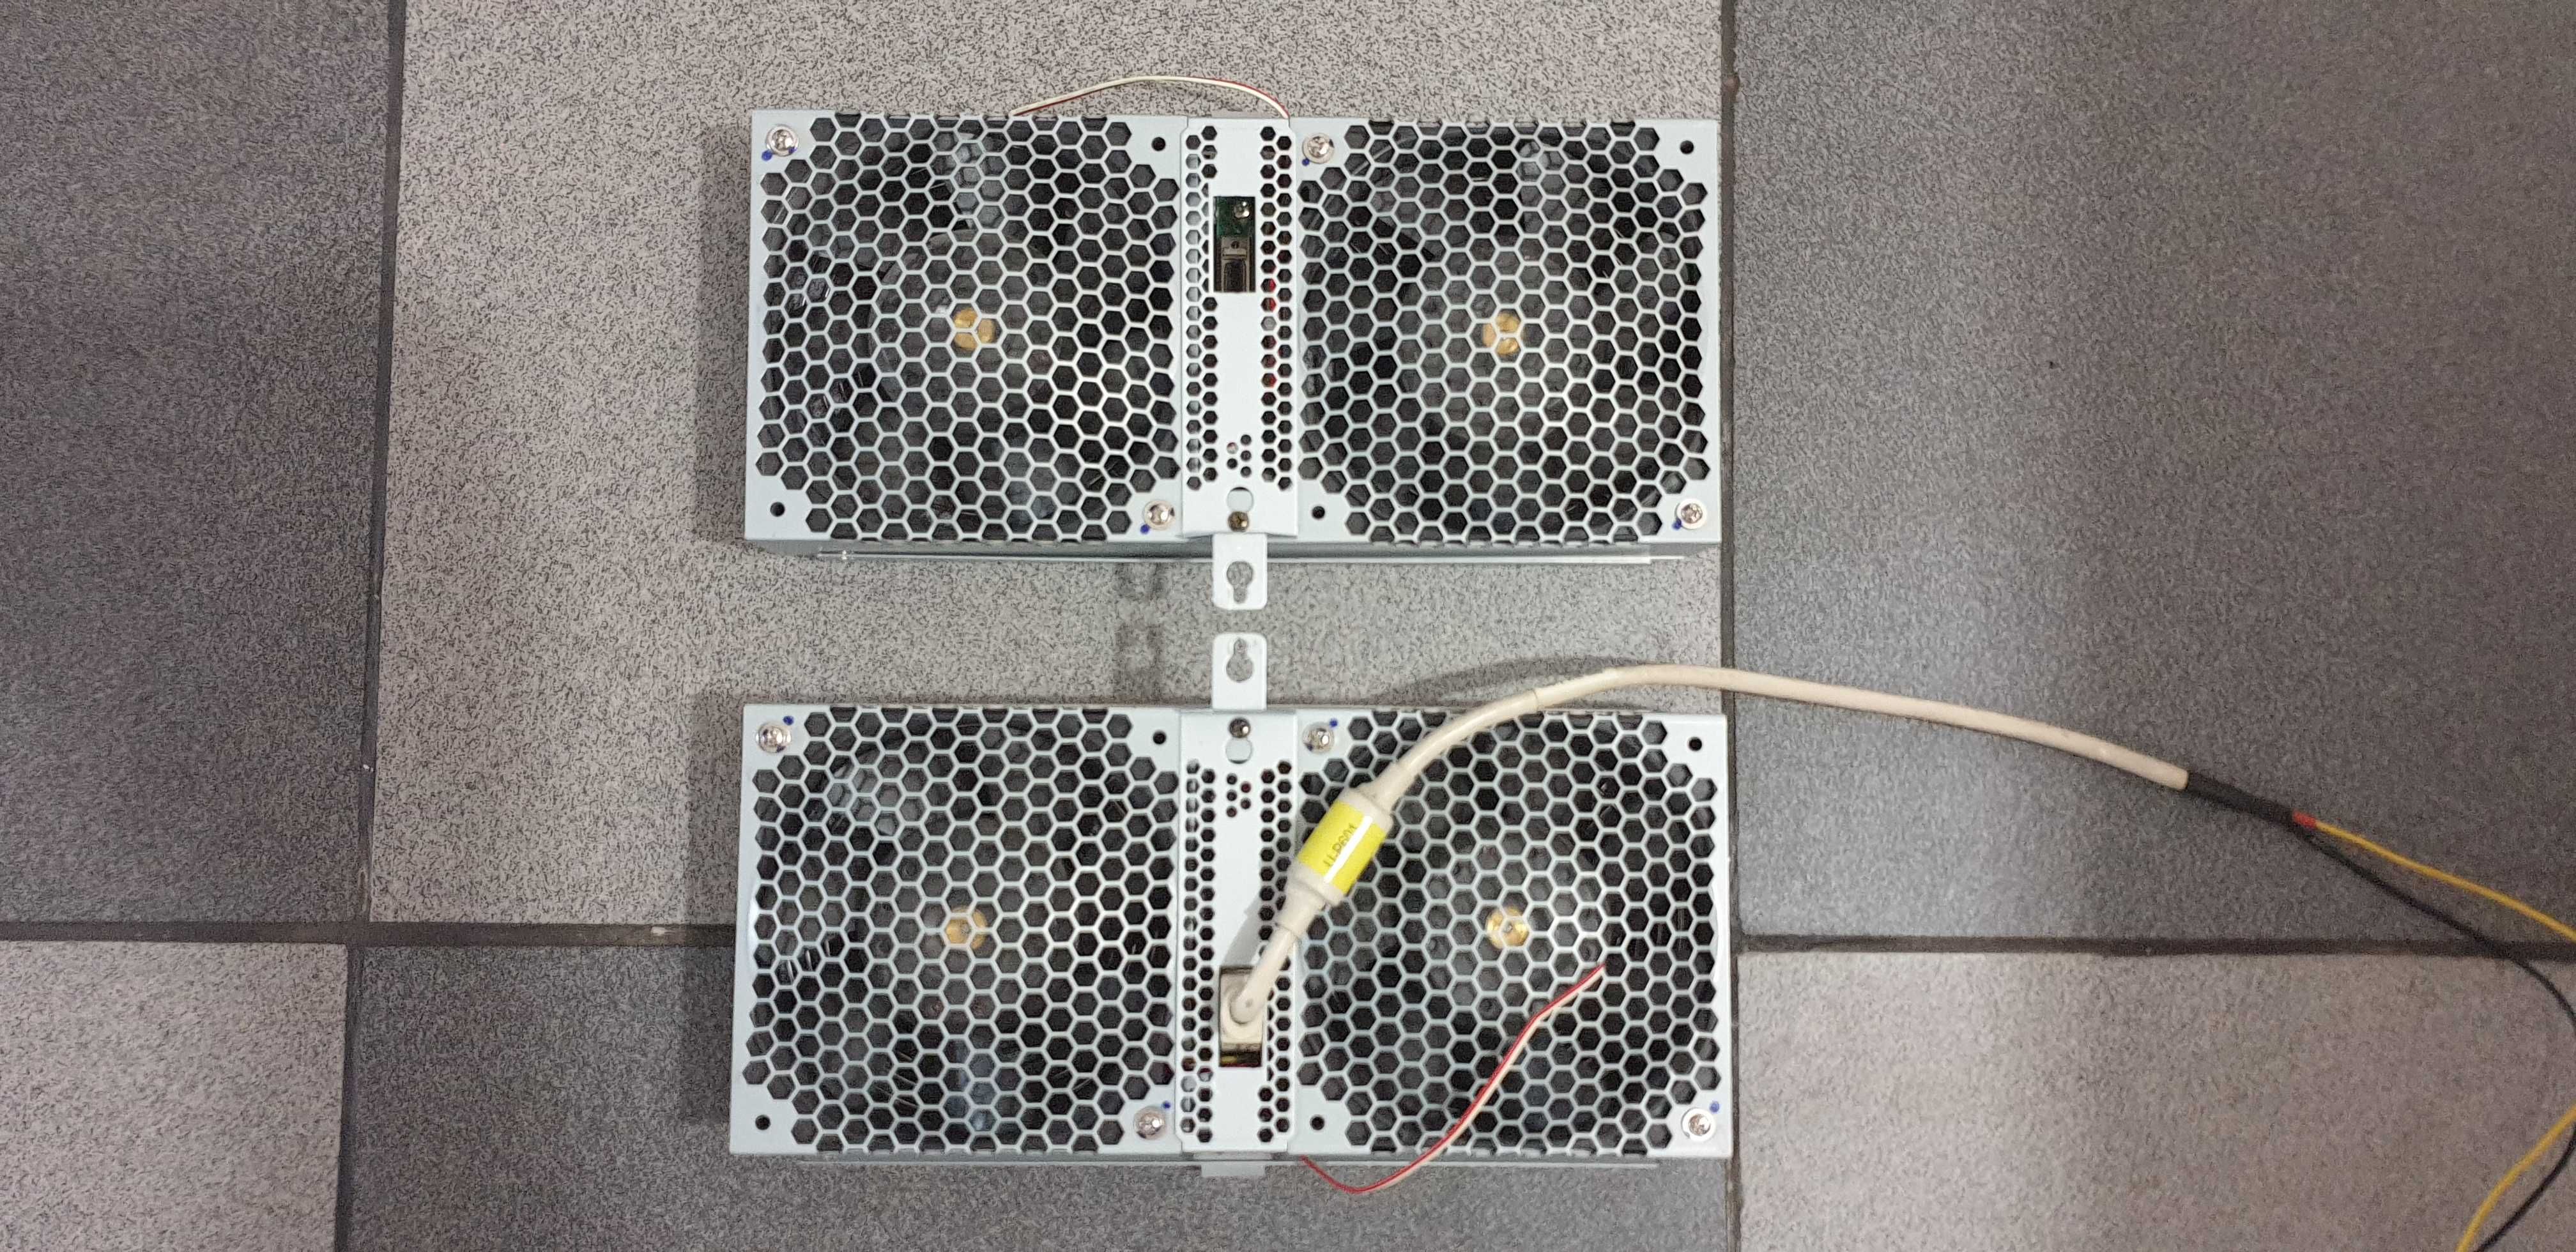 Кулер вентилятор охлаждения для сервера